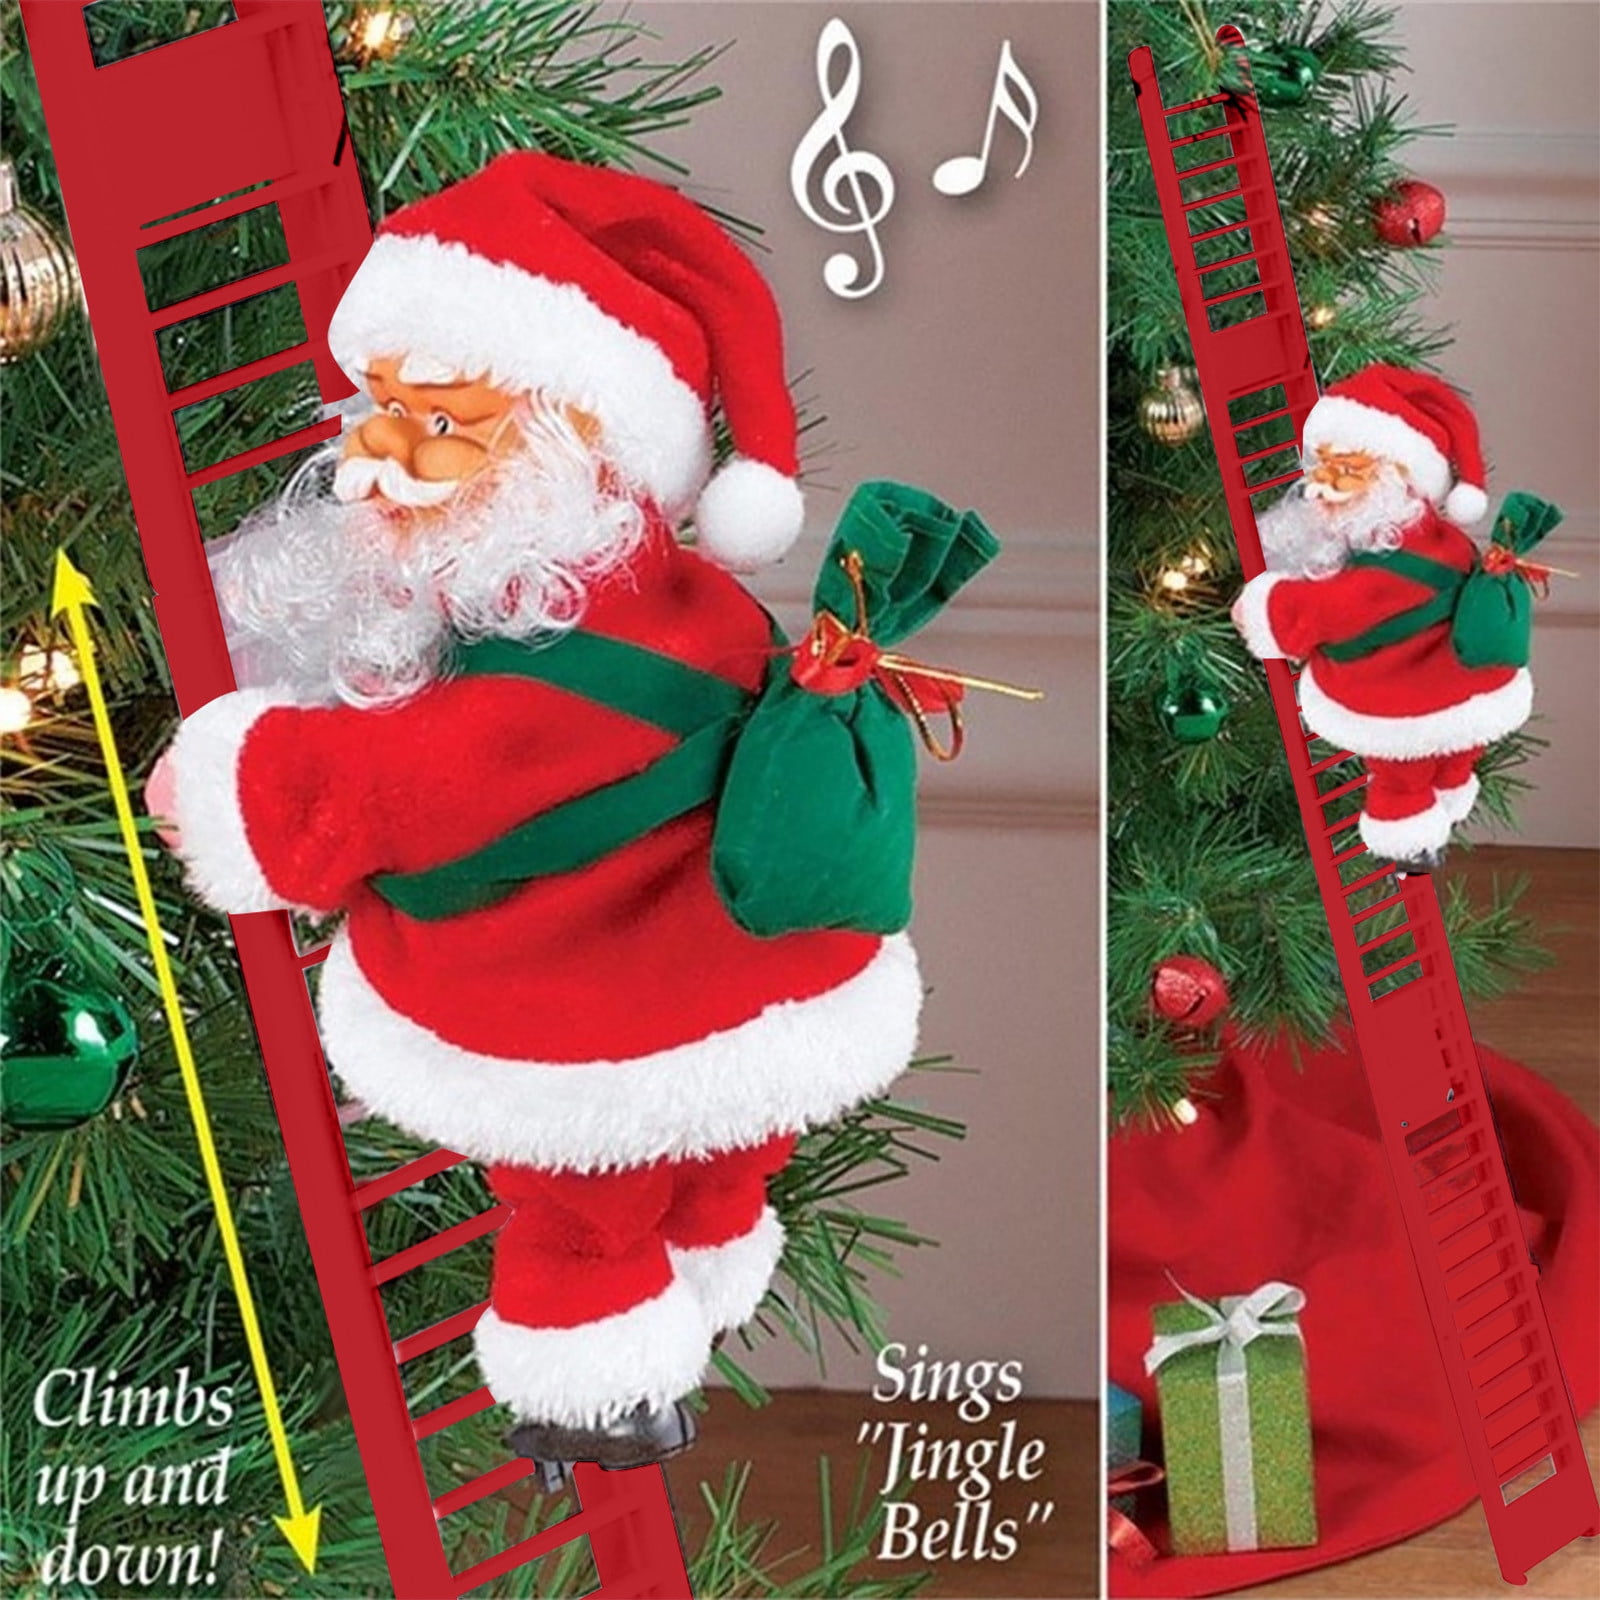 Climbing Ladder Christmas Santa Claus Musical Song Jingle bells New in box 